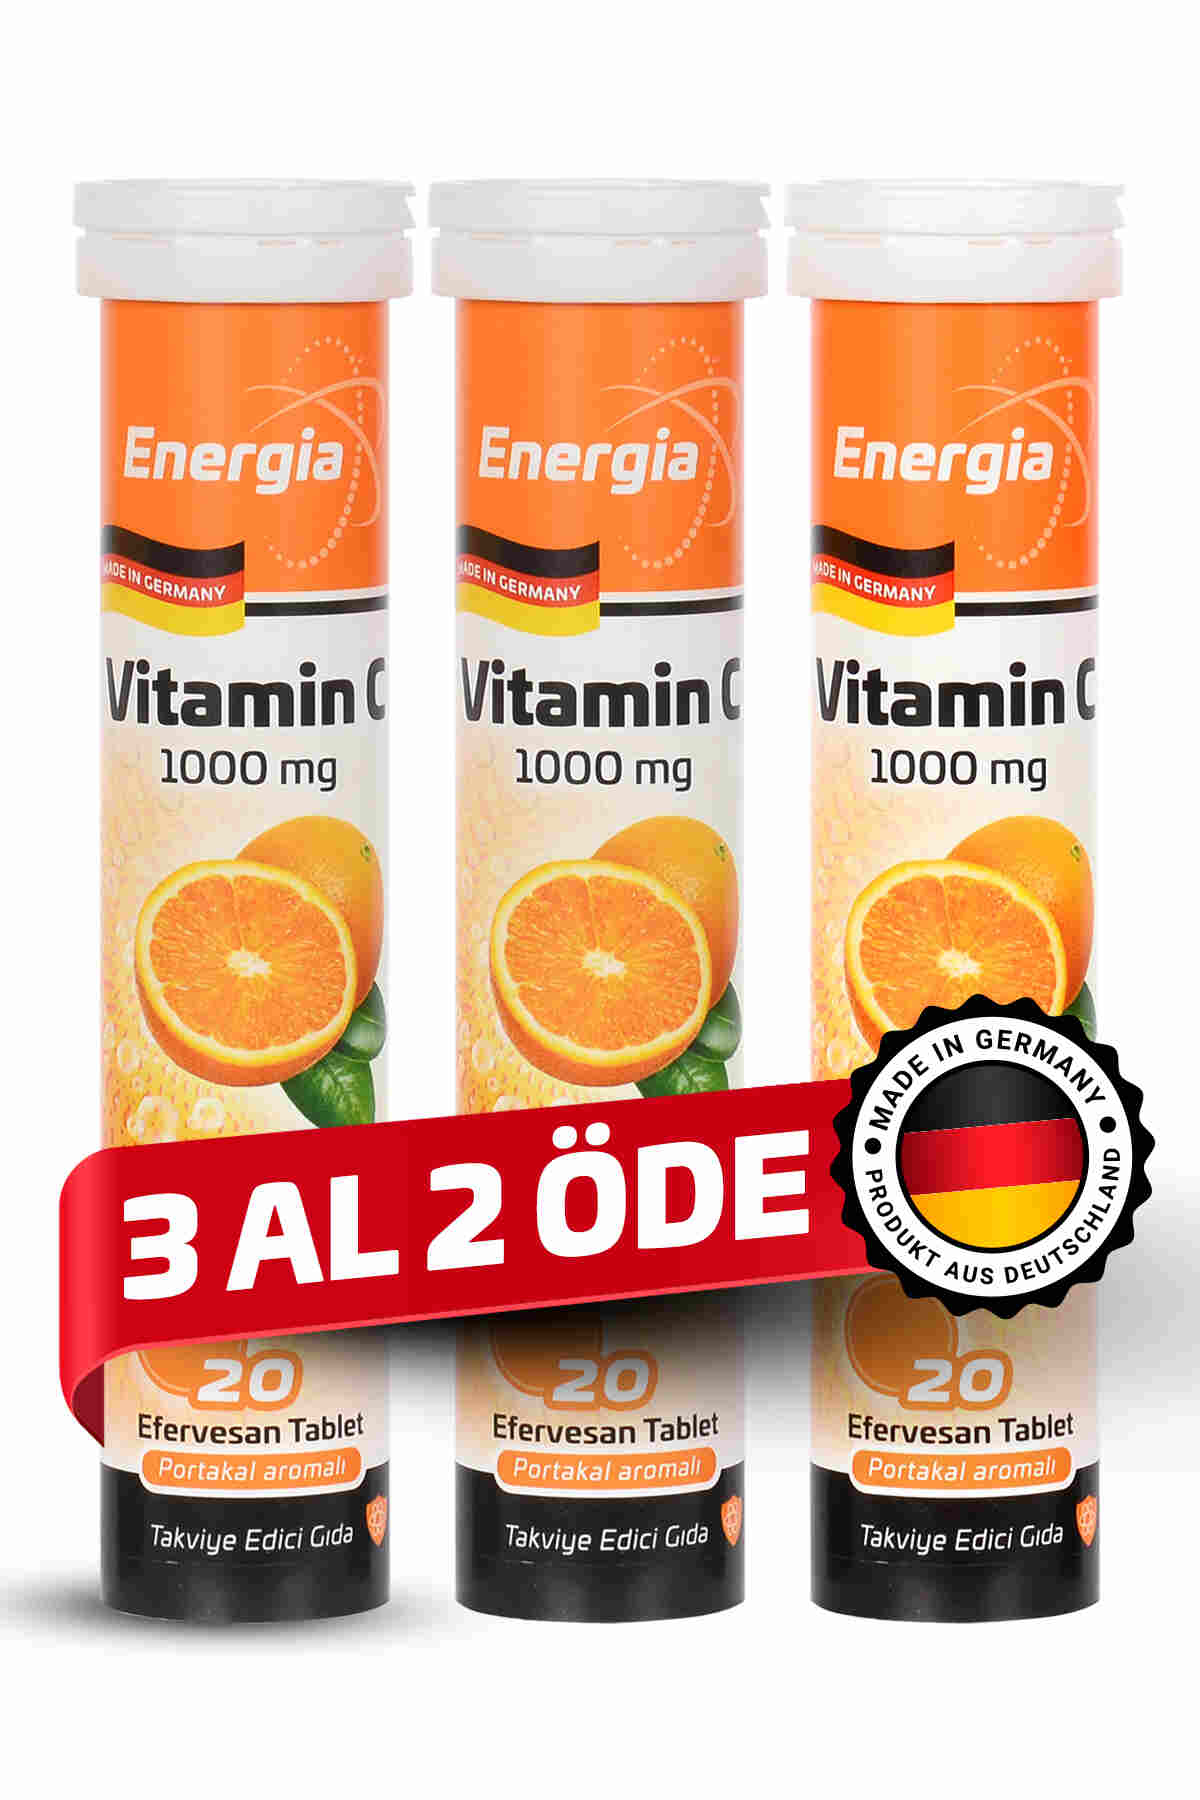 Energia® Vitamin C (1000 Mg) Efervesan Tablet Takviye Edici Gıda 3 al 2 öde